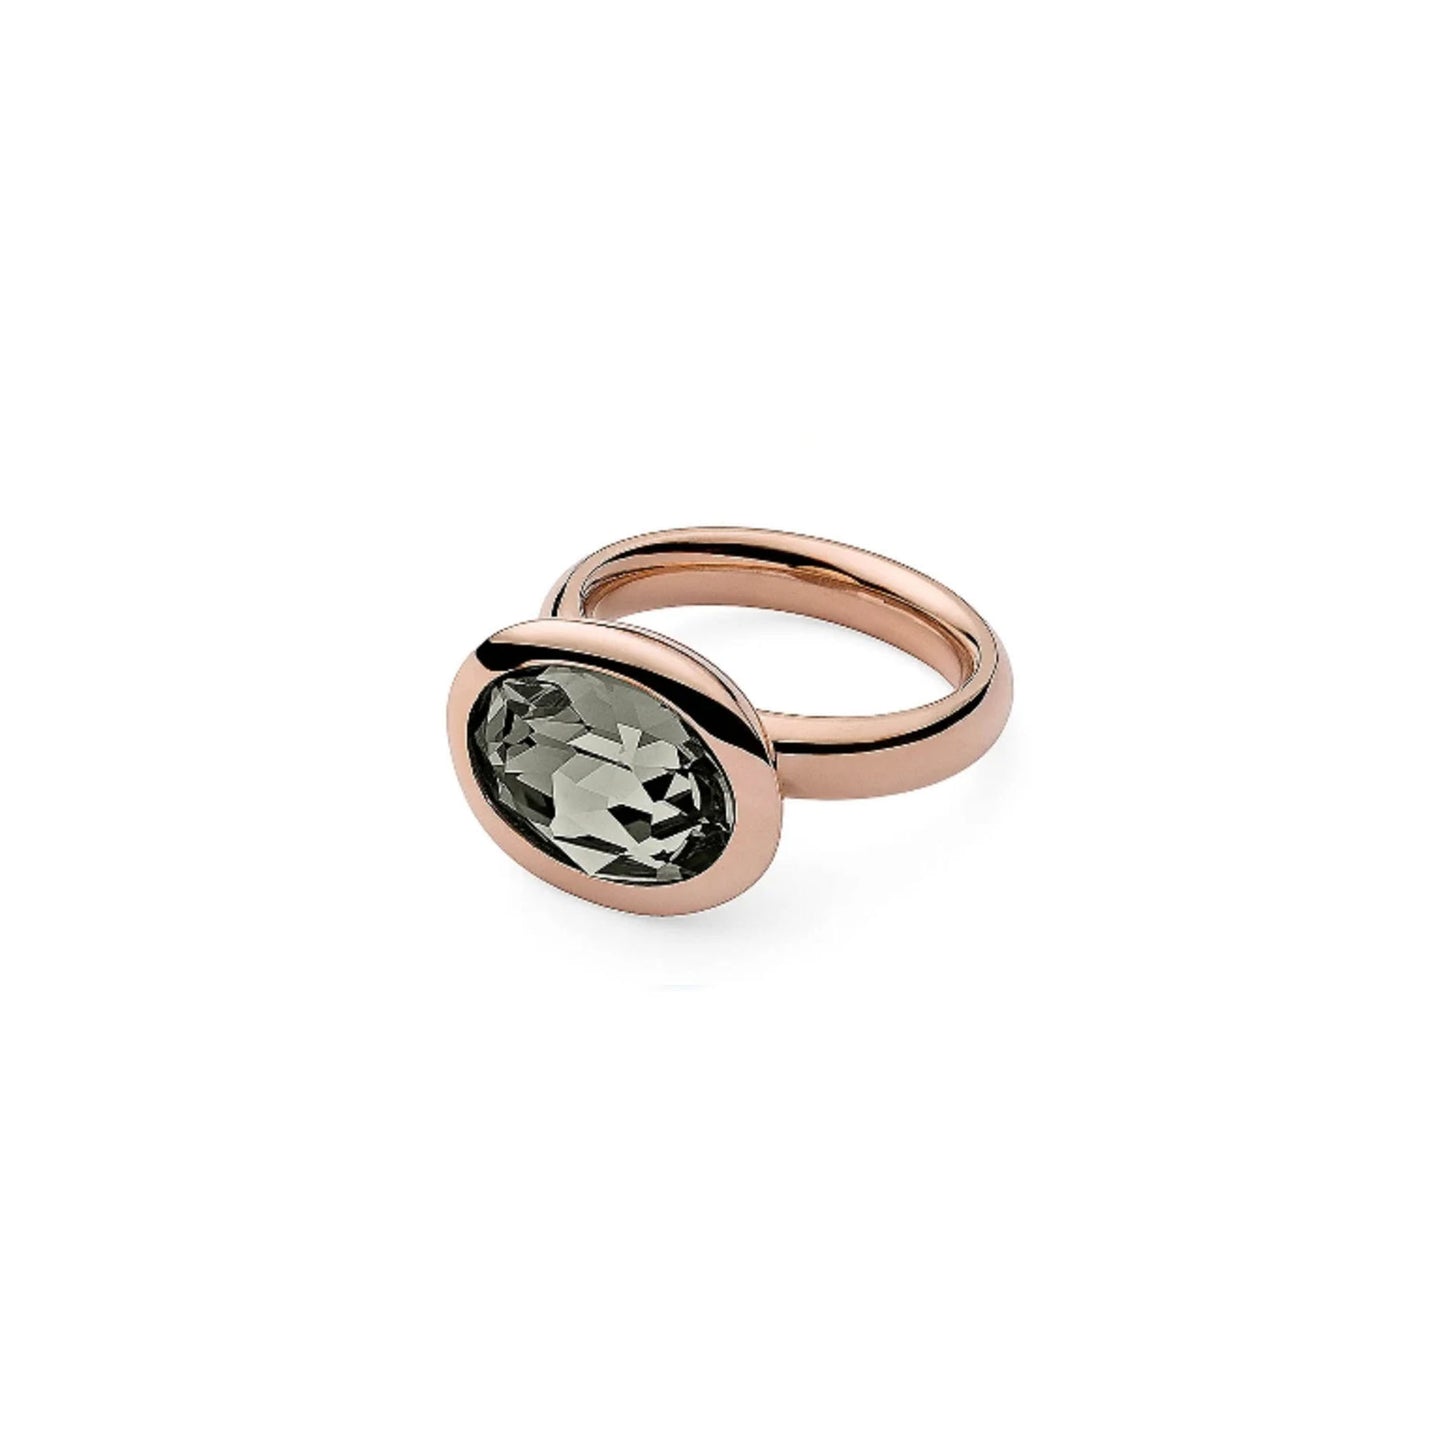 Tivola Ring in Rose Gold - Black Diamond